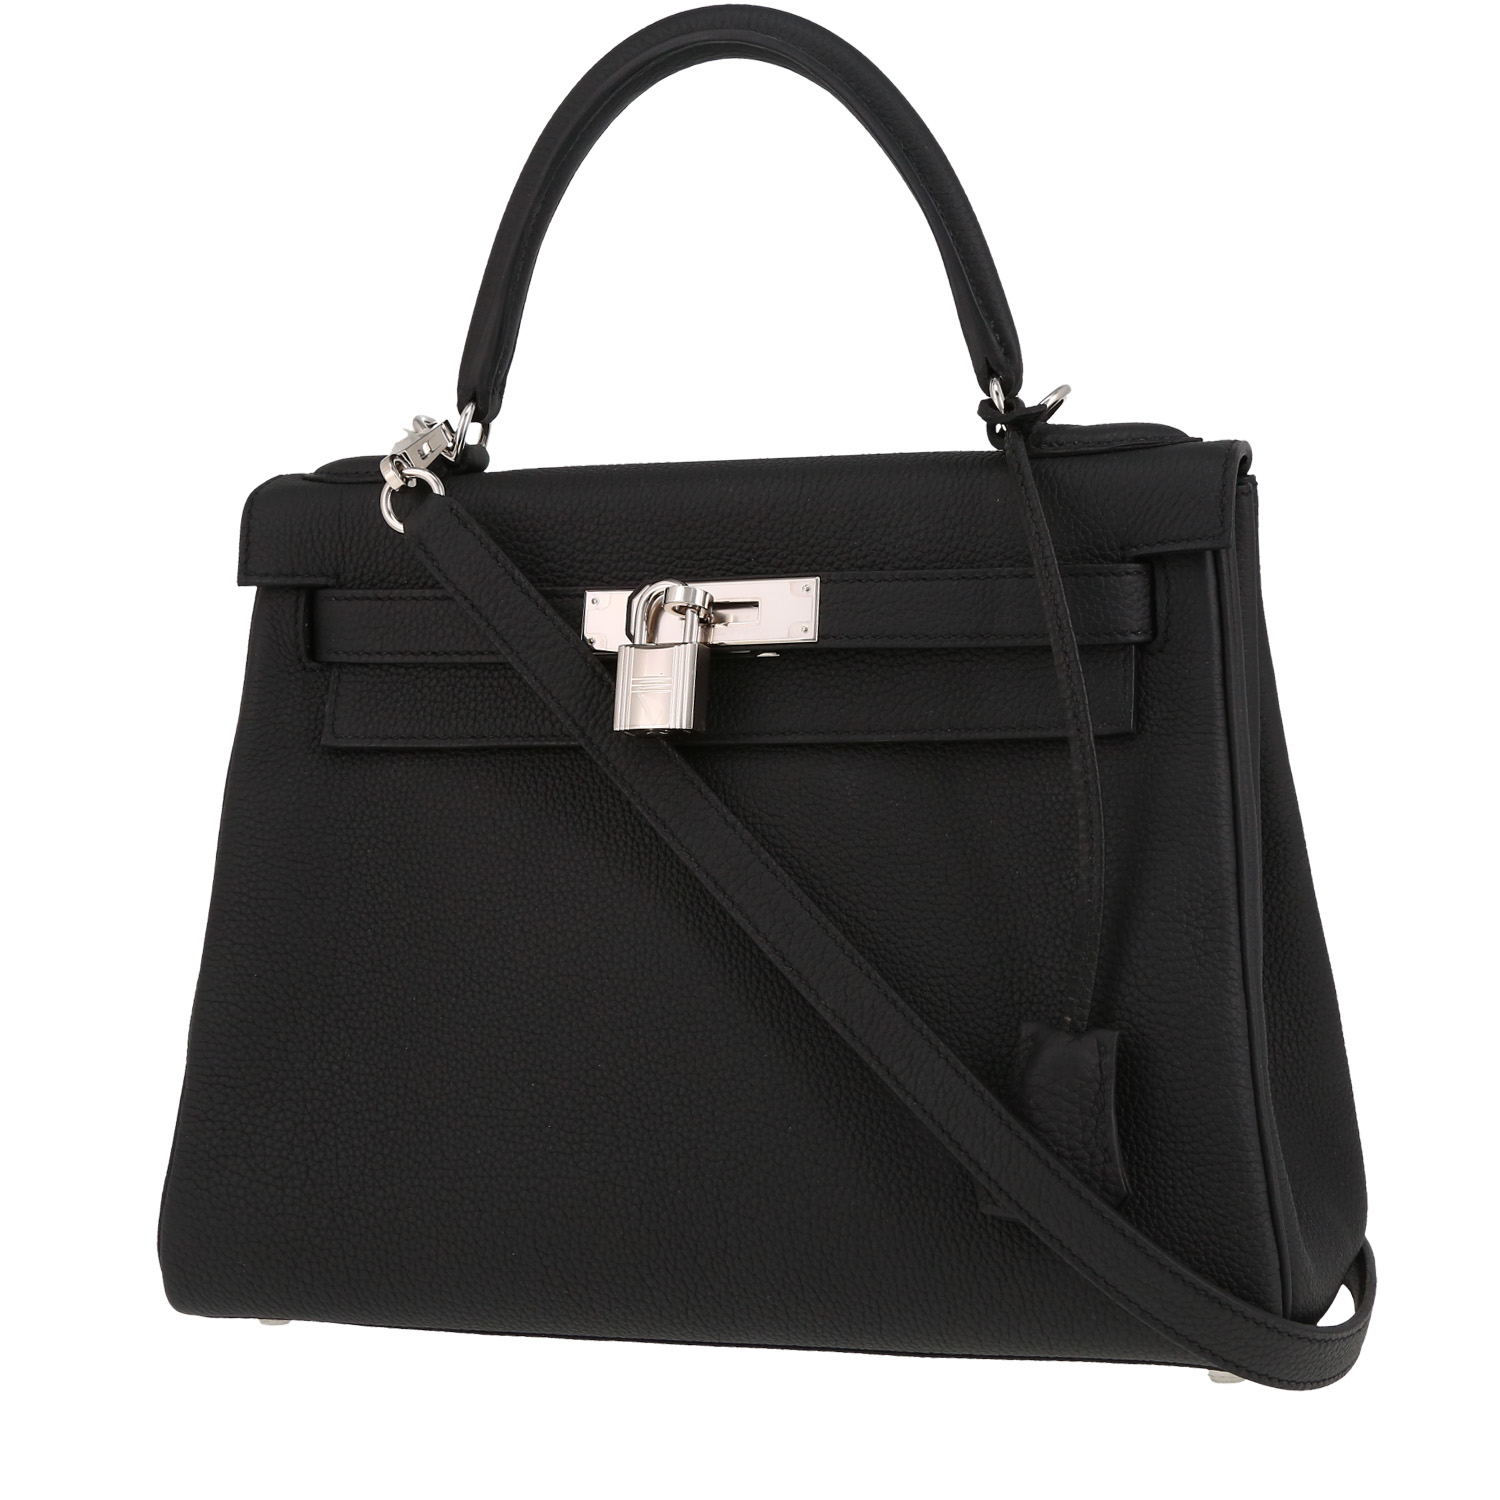 Hermès Kelly 28 cm handbag in black togo leather - 00pp